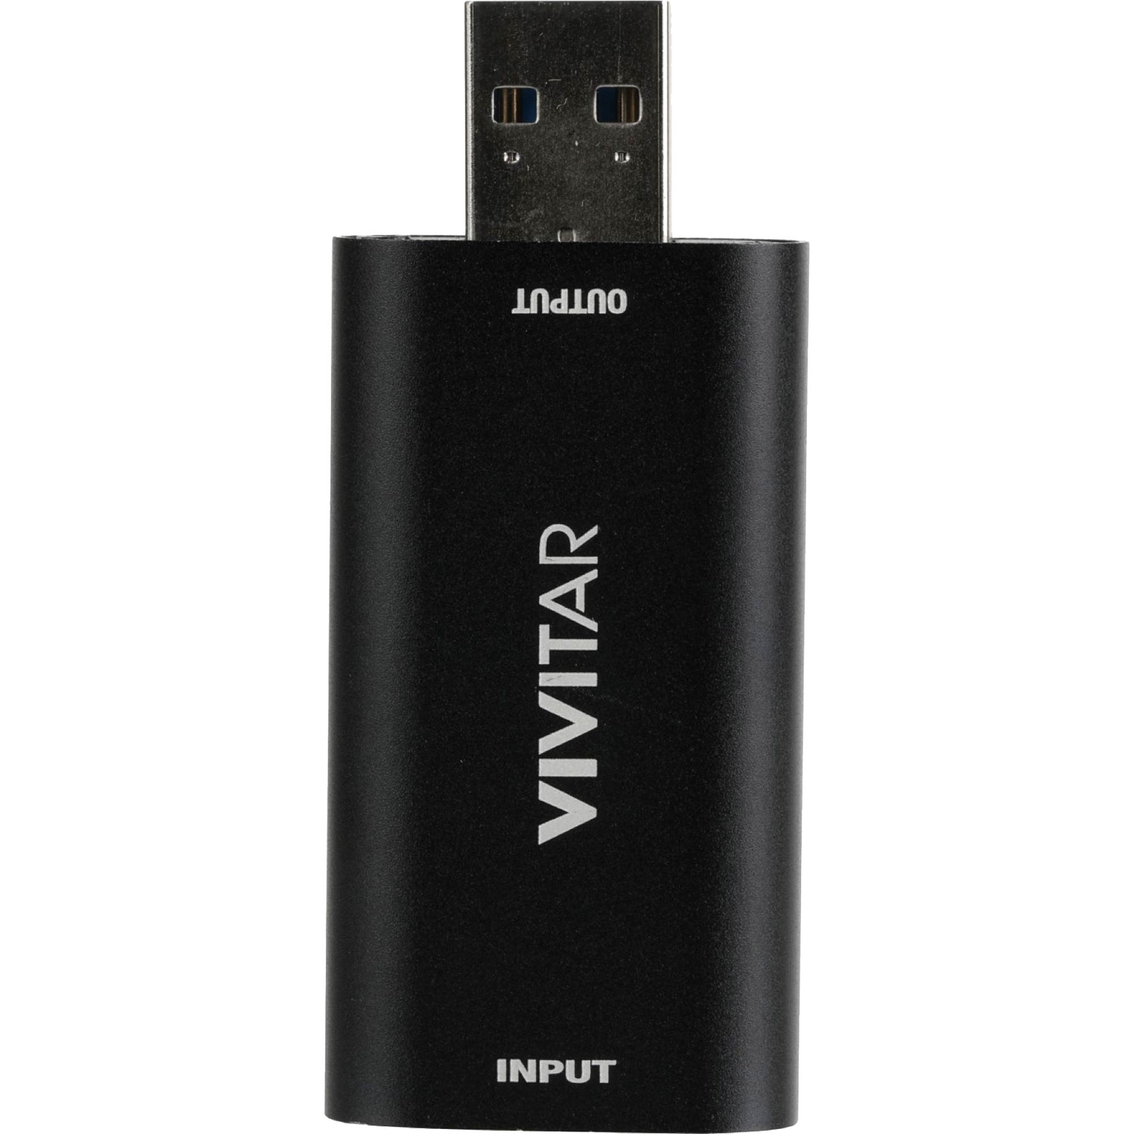 Vivitar HDMI to USB Video Capture Card - Image 3 of 6